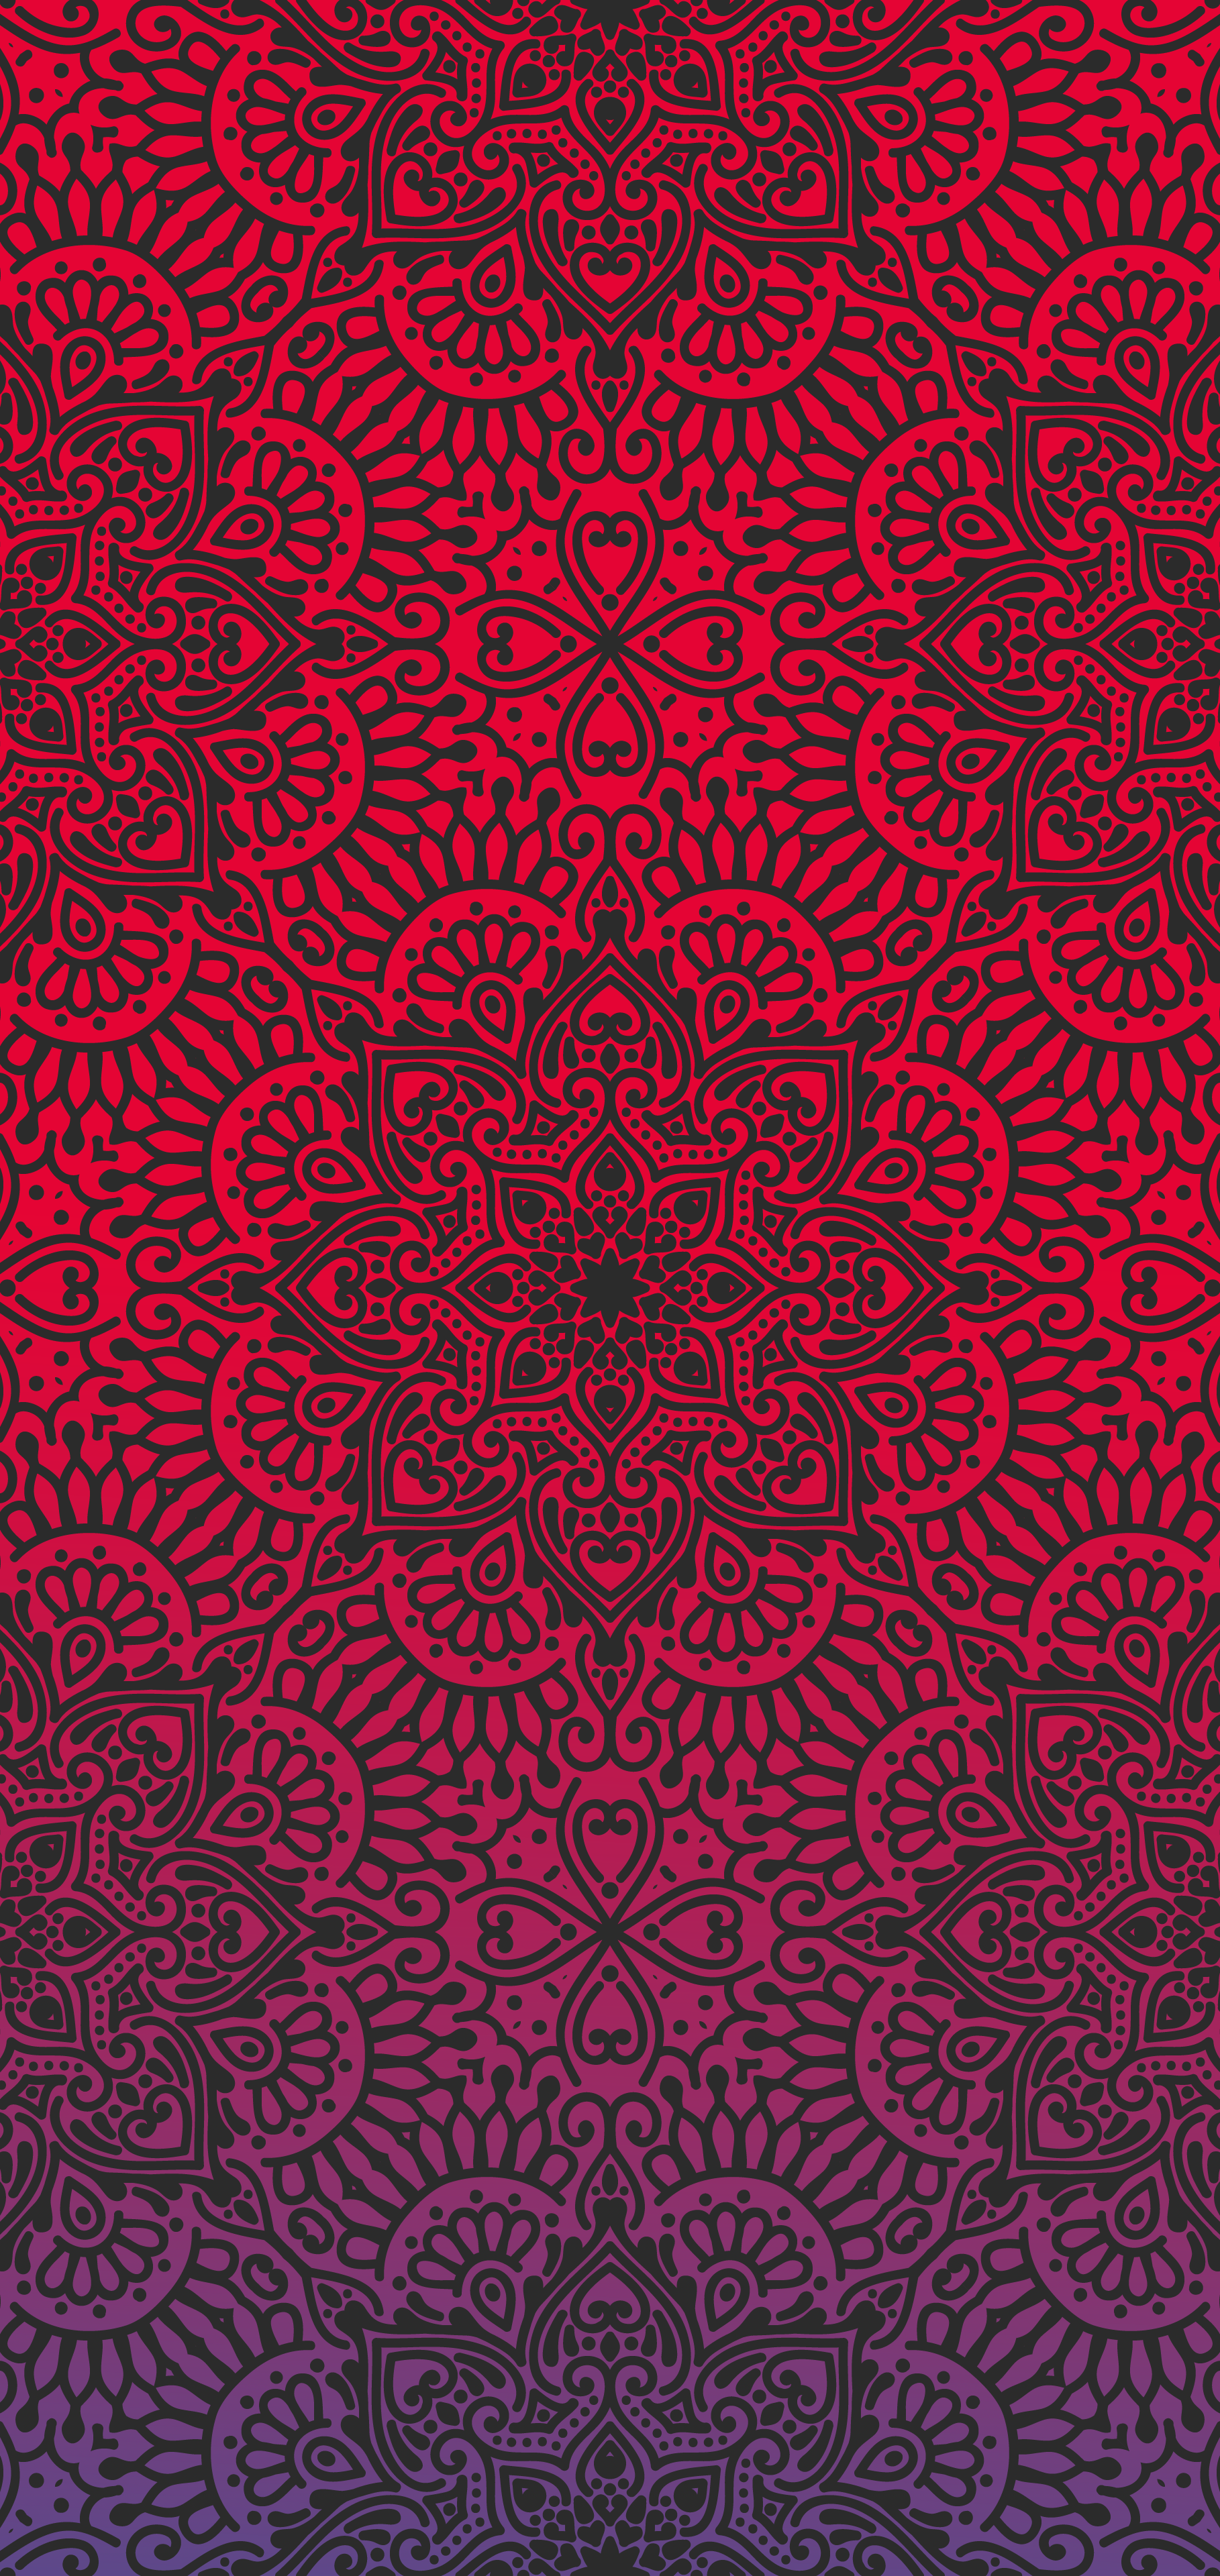 Download wallpaper 1440x2960 orange pattern, fractal, mandala pattern,  abstract, samsung galaxy s8, samsung galaxy s8 plus, 1440x2960 hd  background, 26736